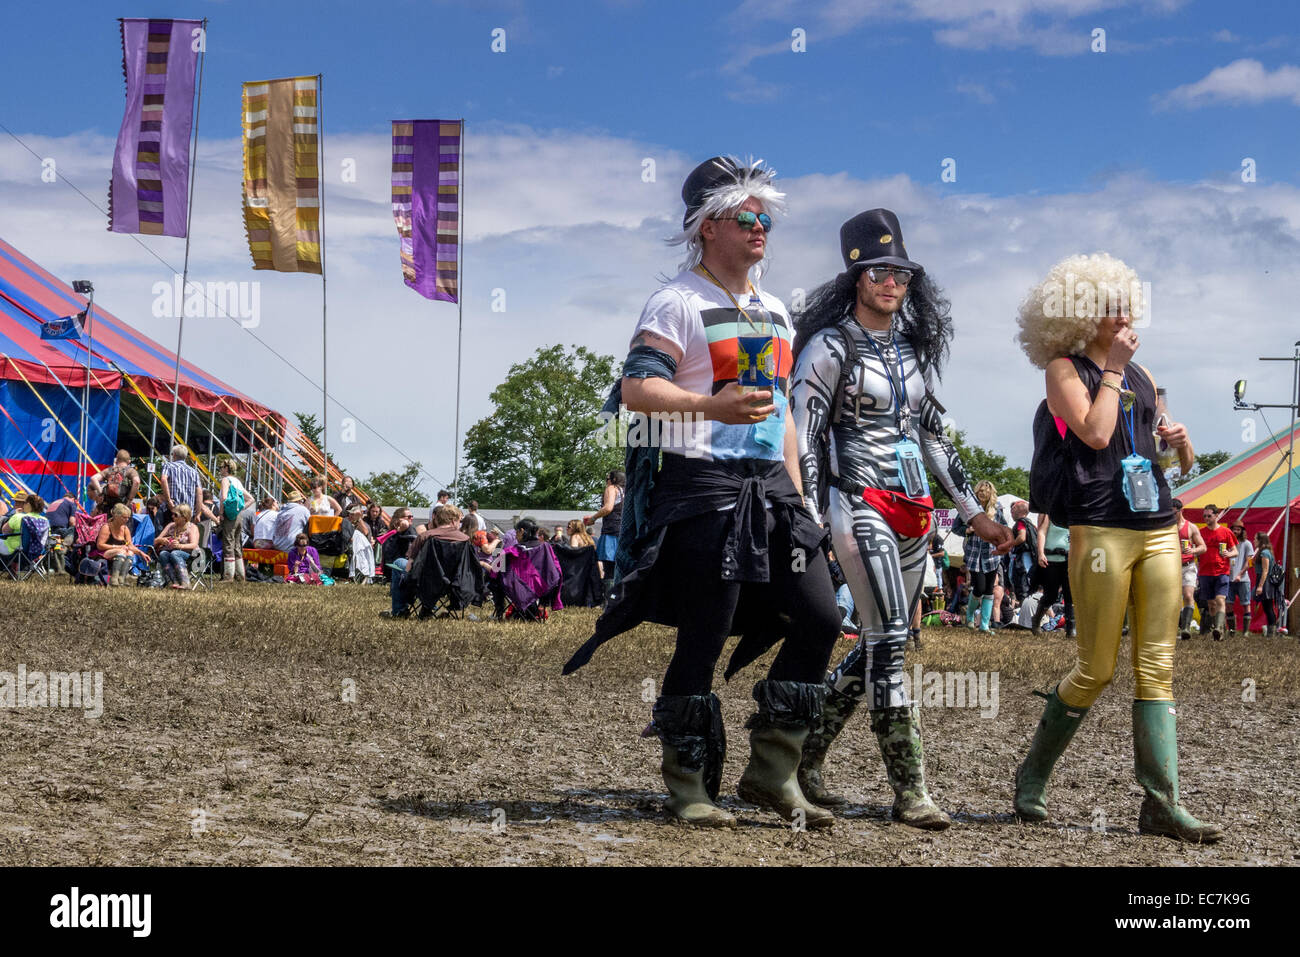 The Glastonbury Festival in Somerset, England. Stock Photo